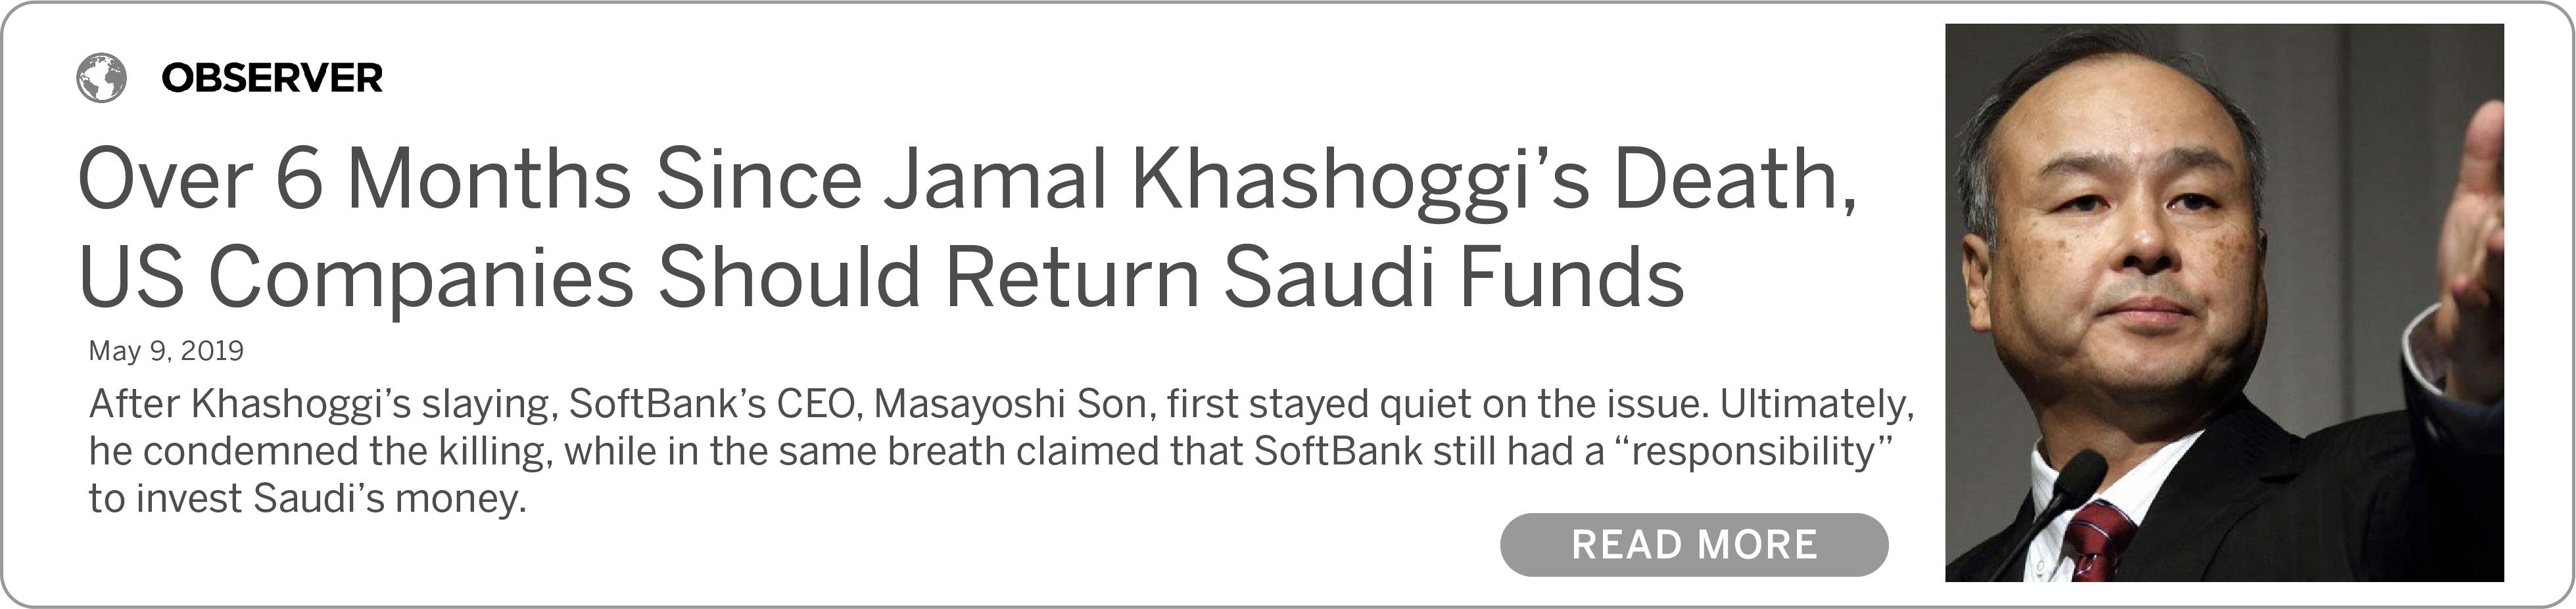 Over 6 Months Since Jamal Khashoggi's Death, US Companies Should Return Saudi Funds